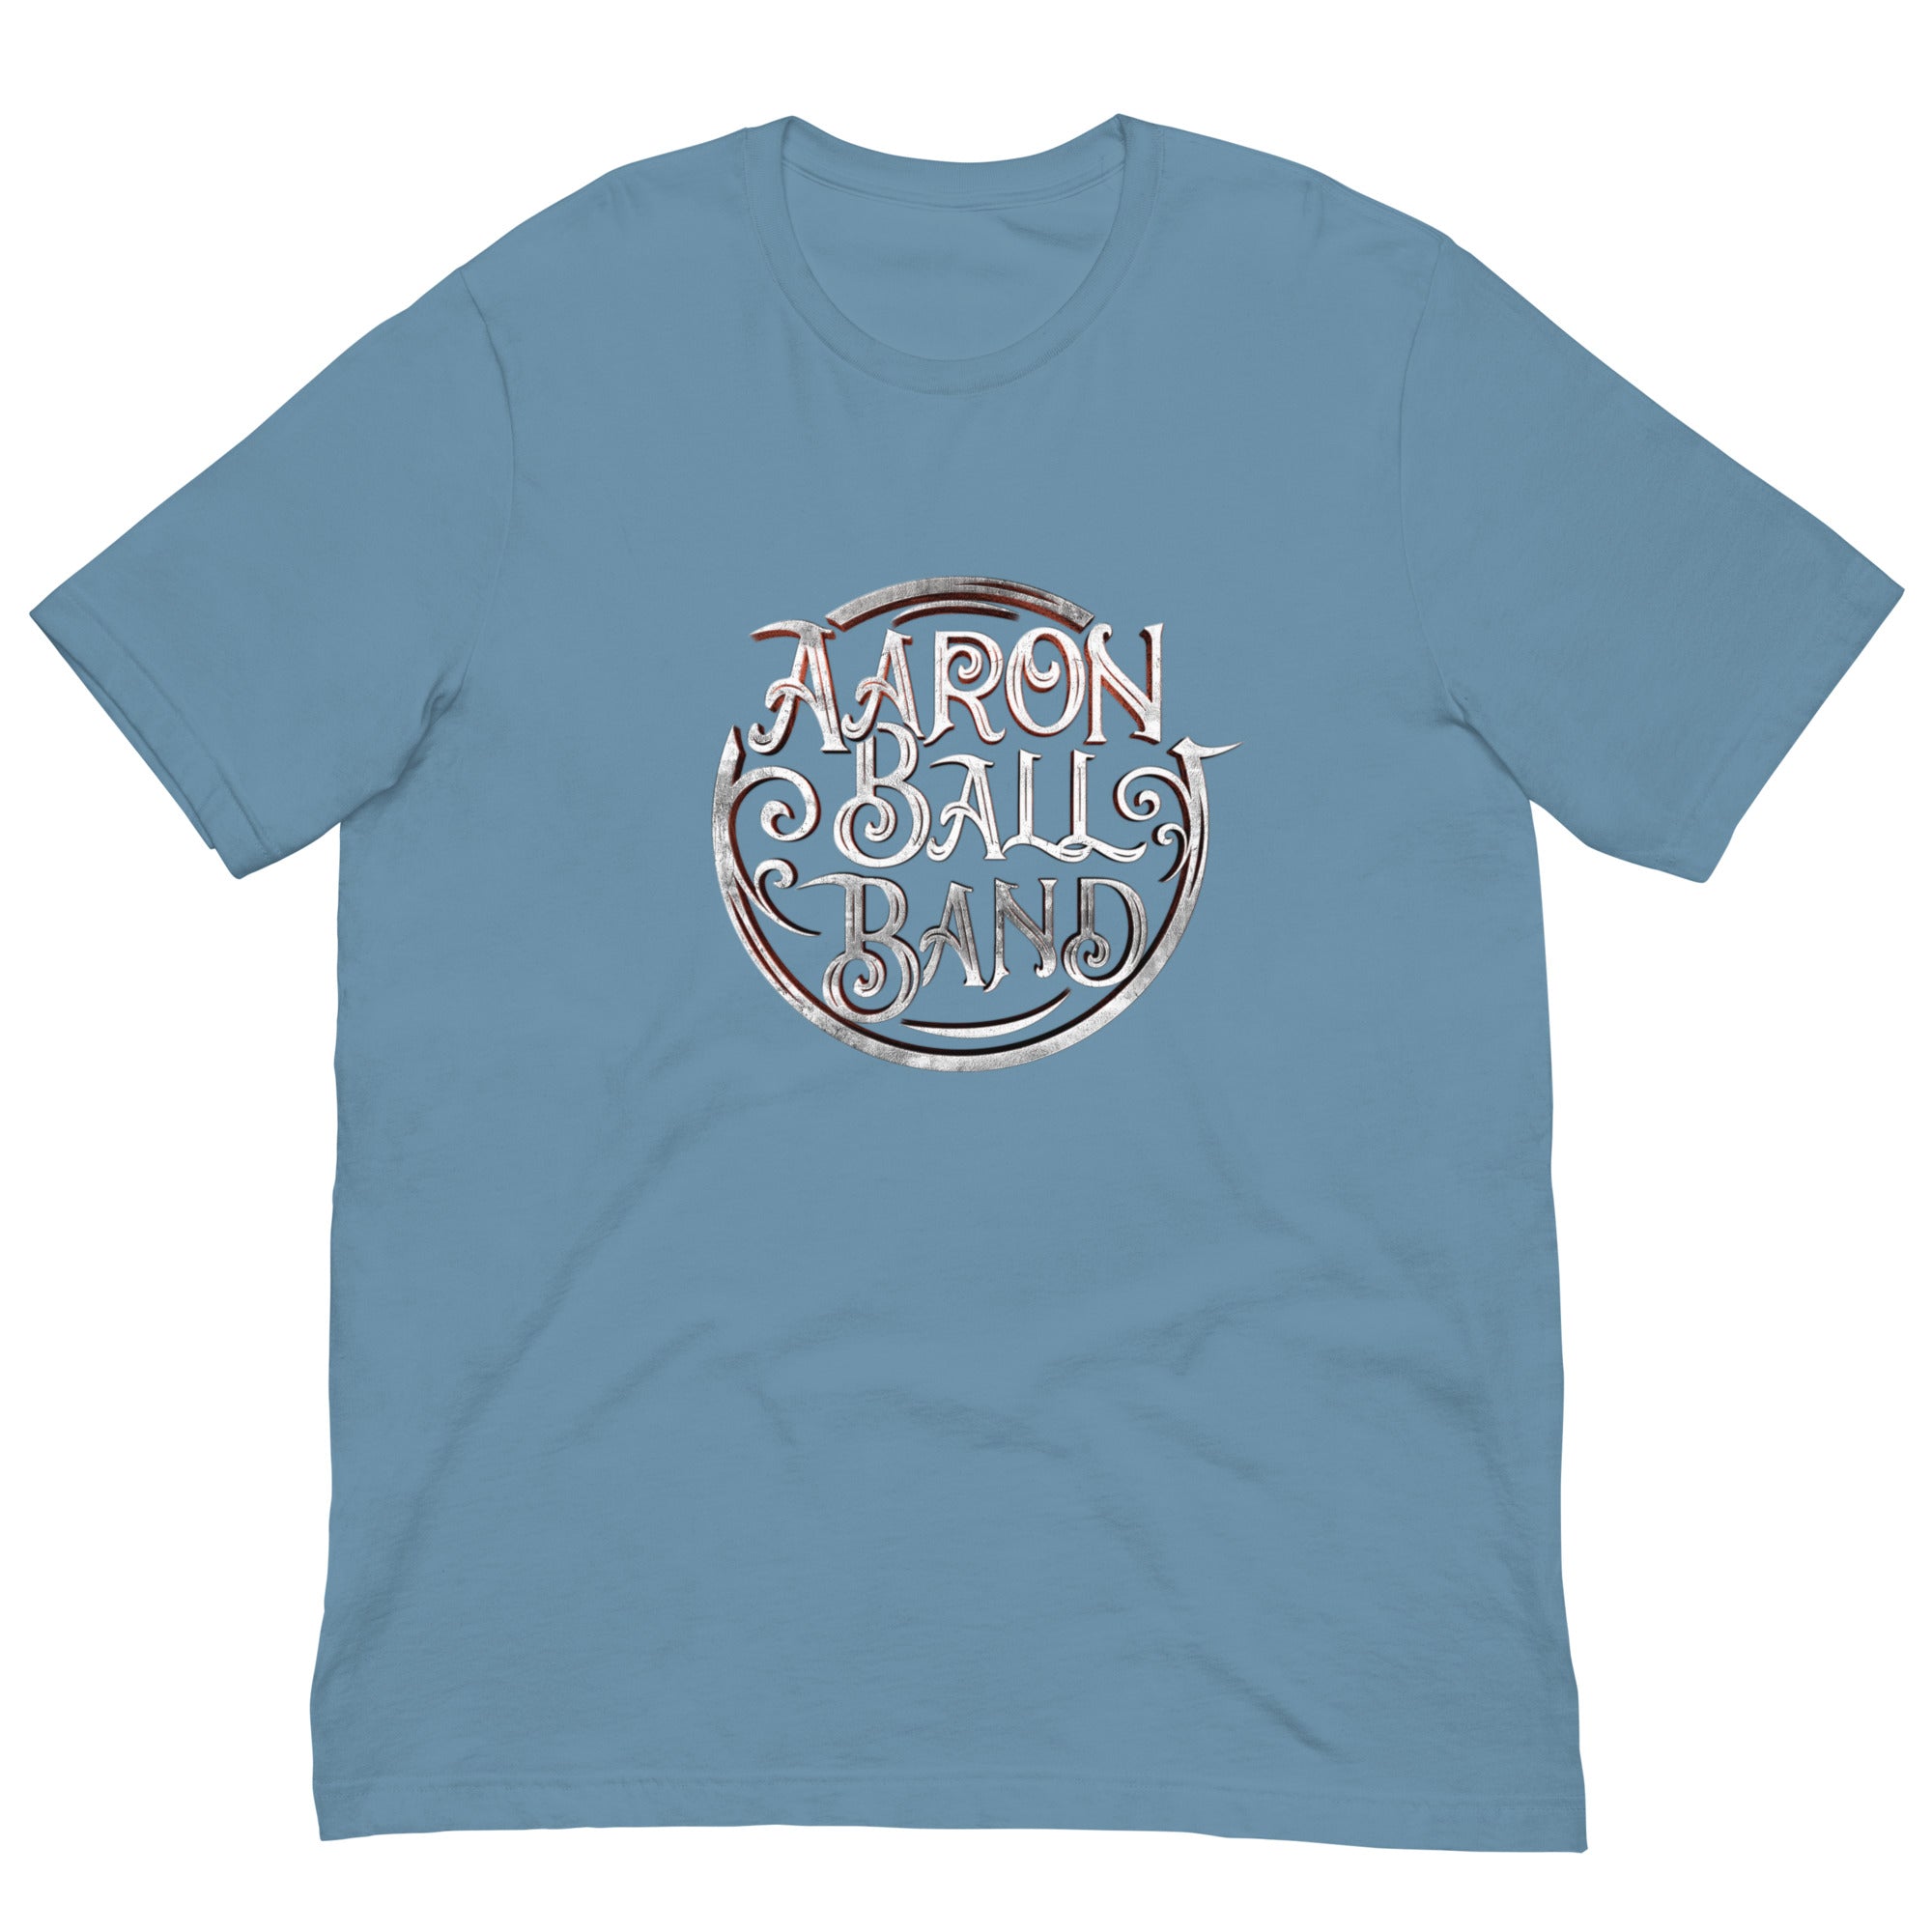 Aaron Ball Band - Unisex t-shirt